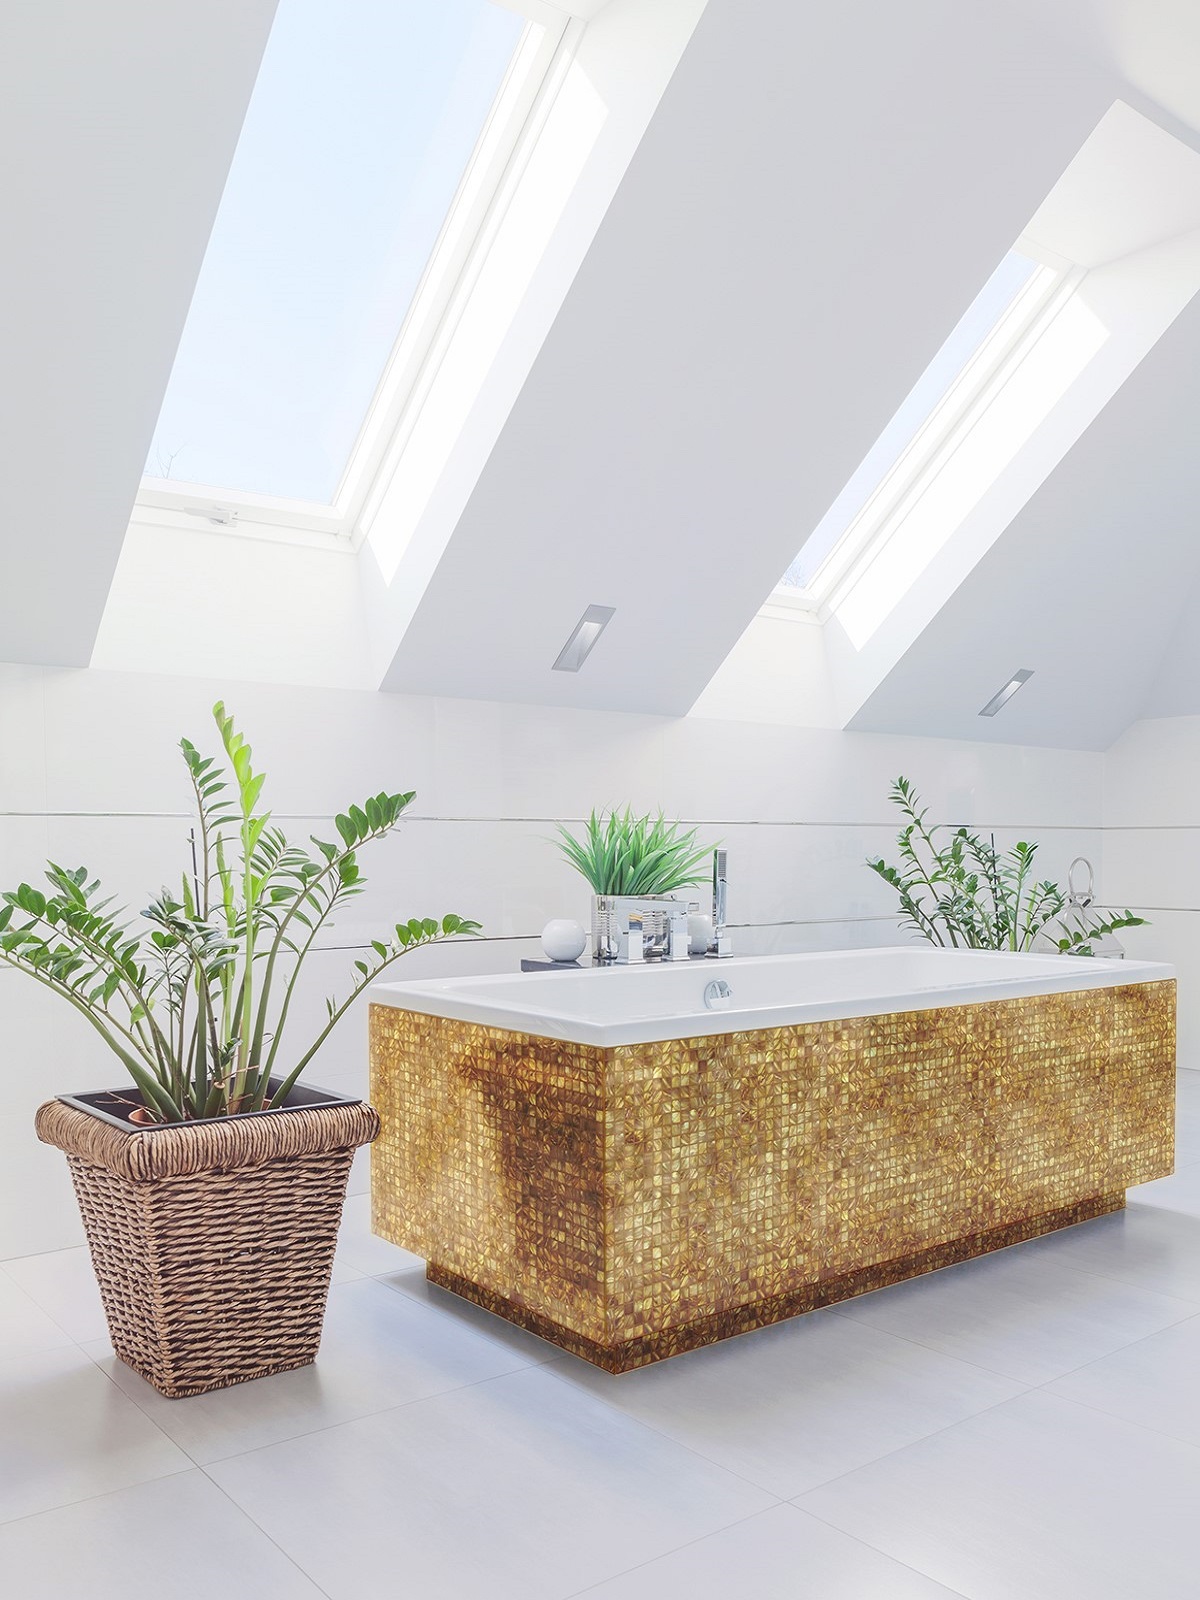 Siminetti Emerald Gold tiles vovering bathtub in white bathroom